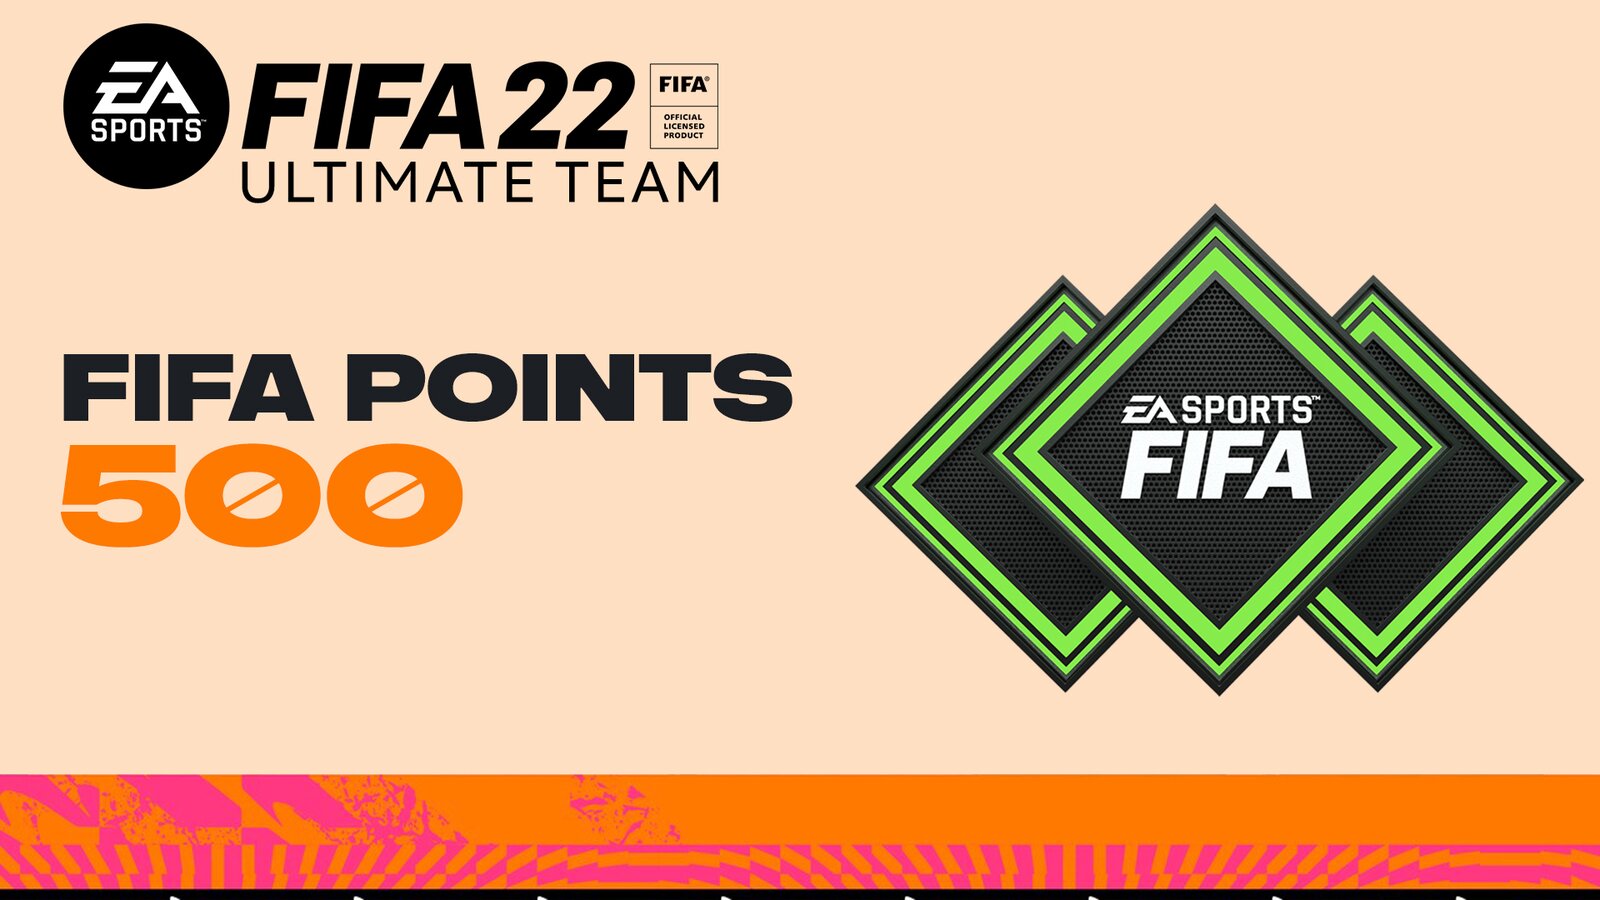 FIFA 22 Ultimate Team - 500 очков FIFA Points